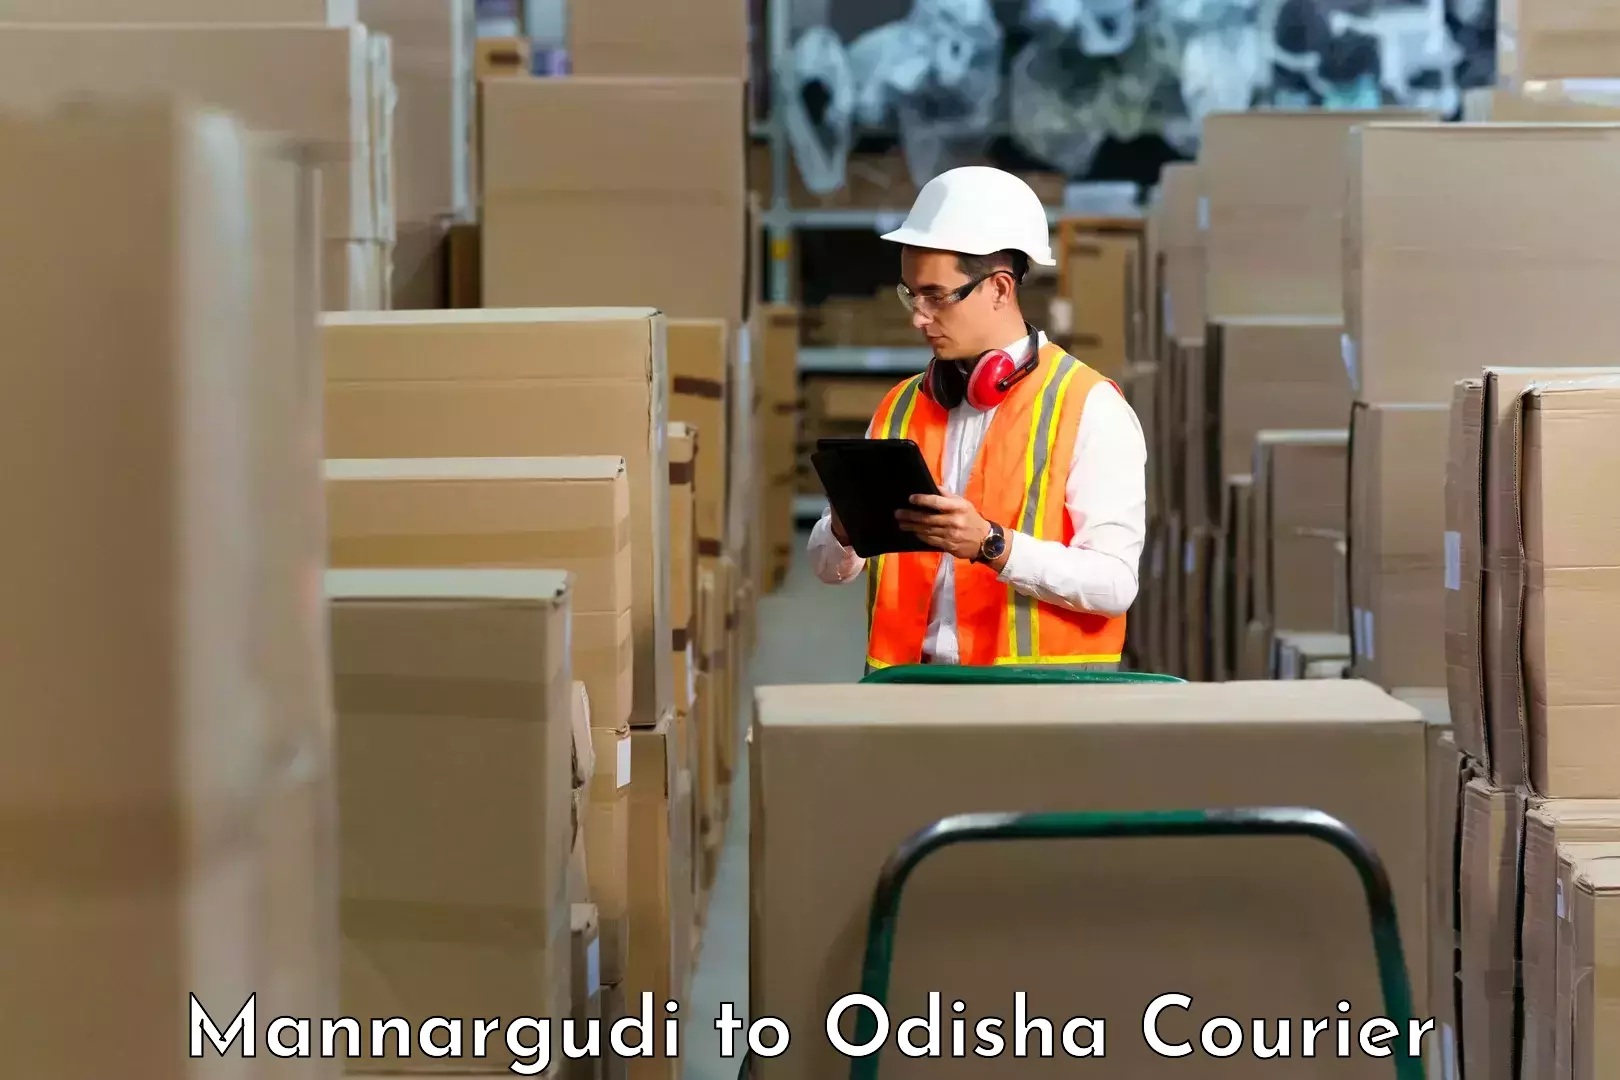 Professional courier handling Mannargudi to Odisha